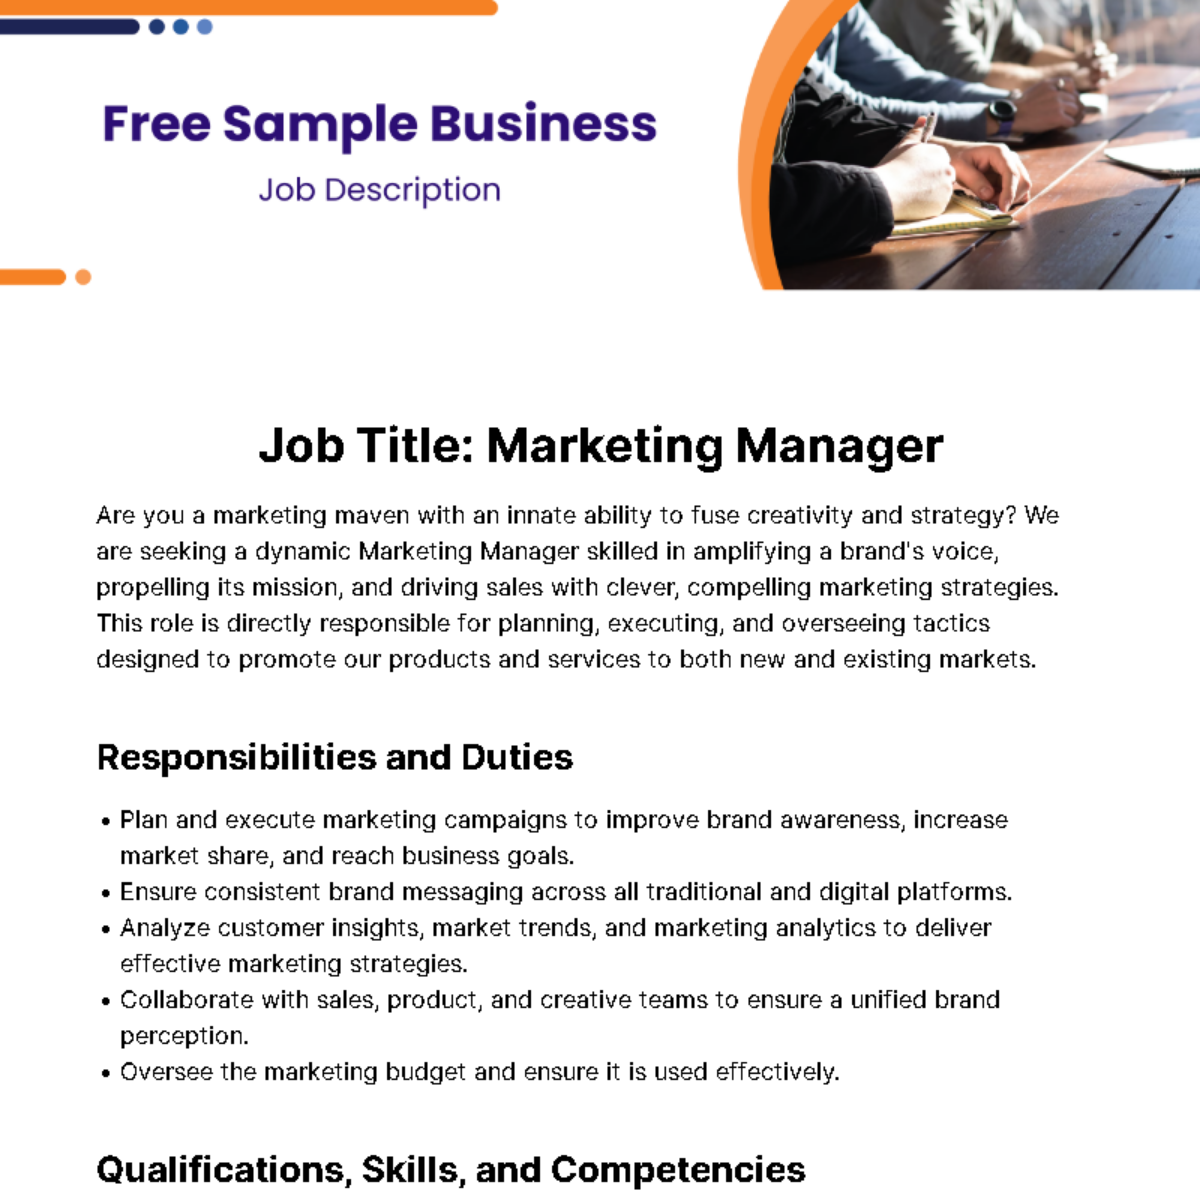 Sample Business Job Description Template